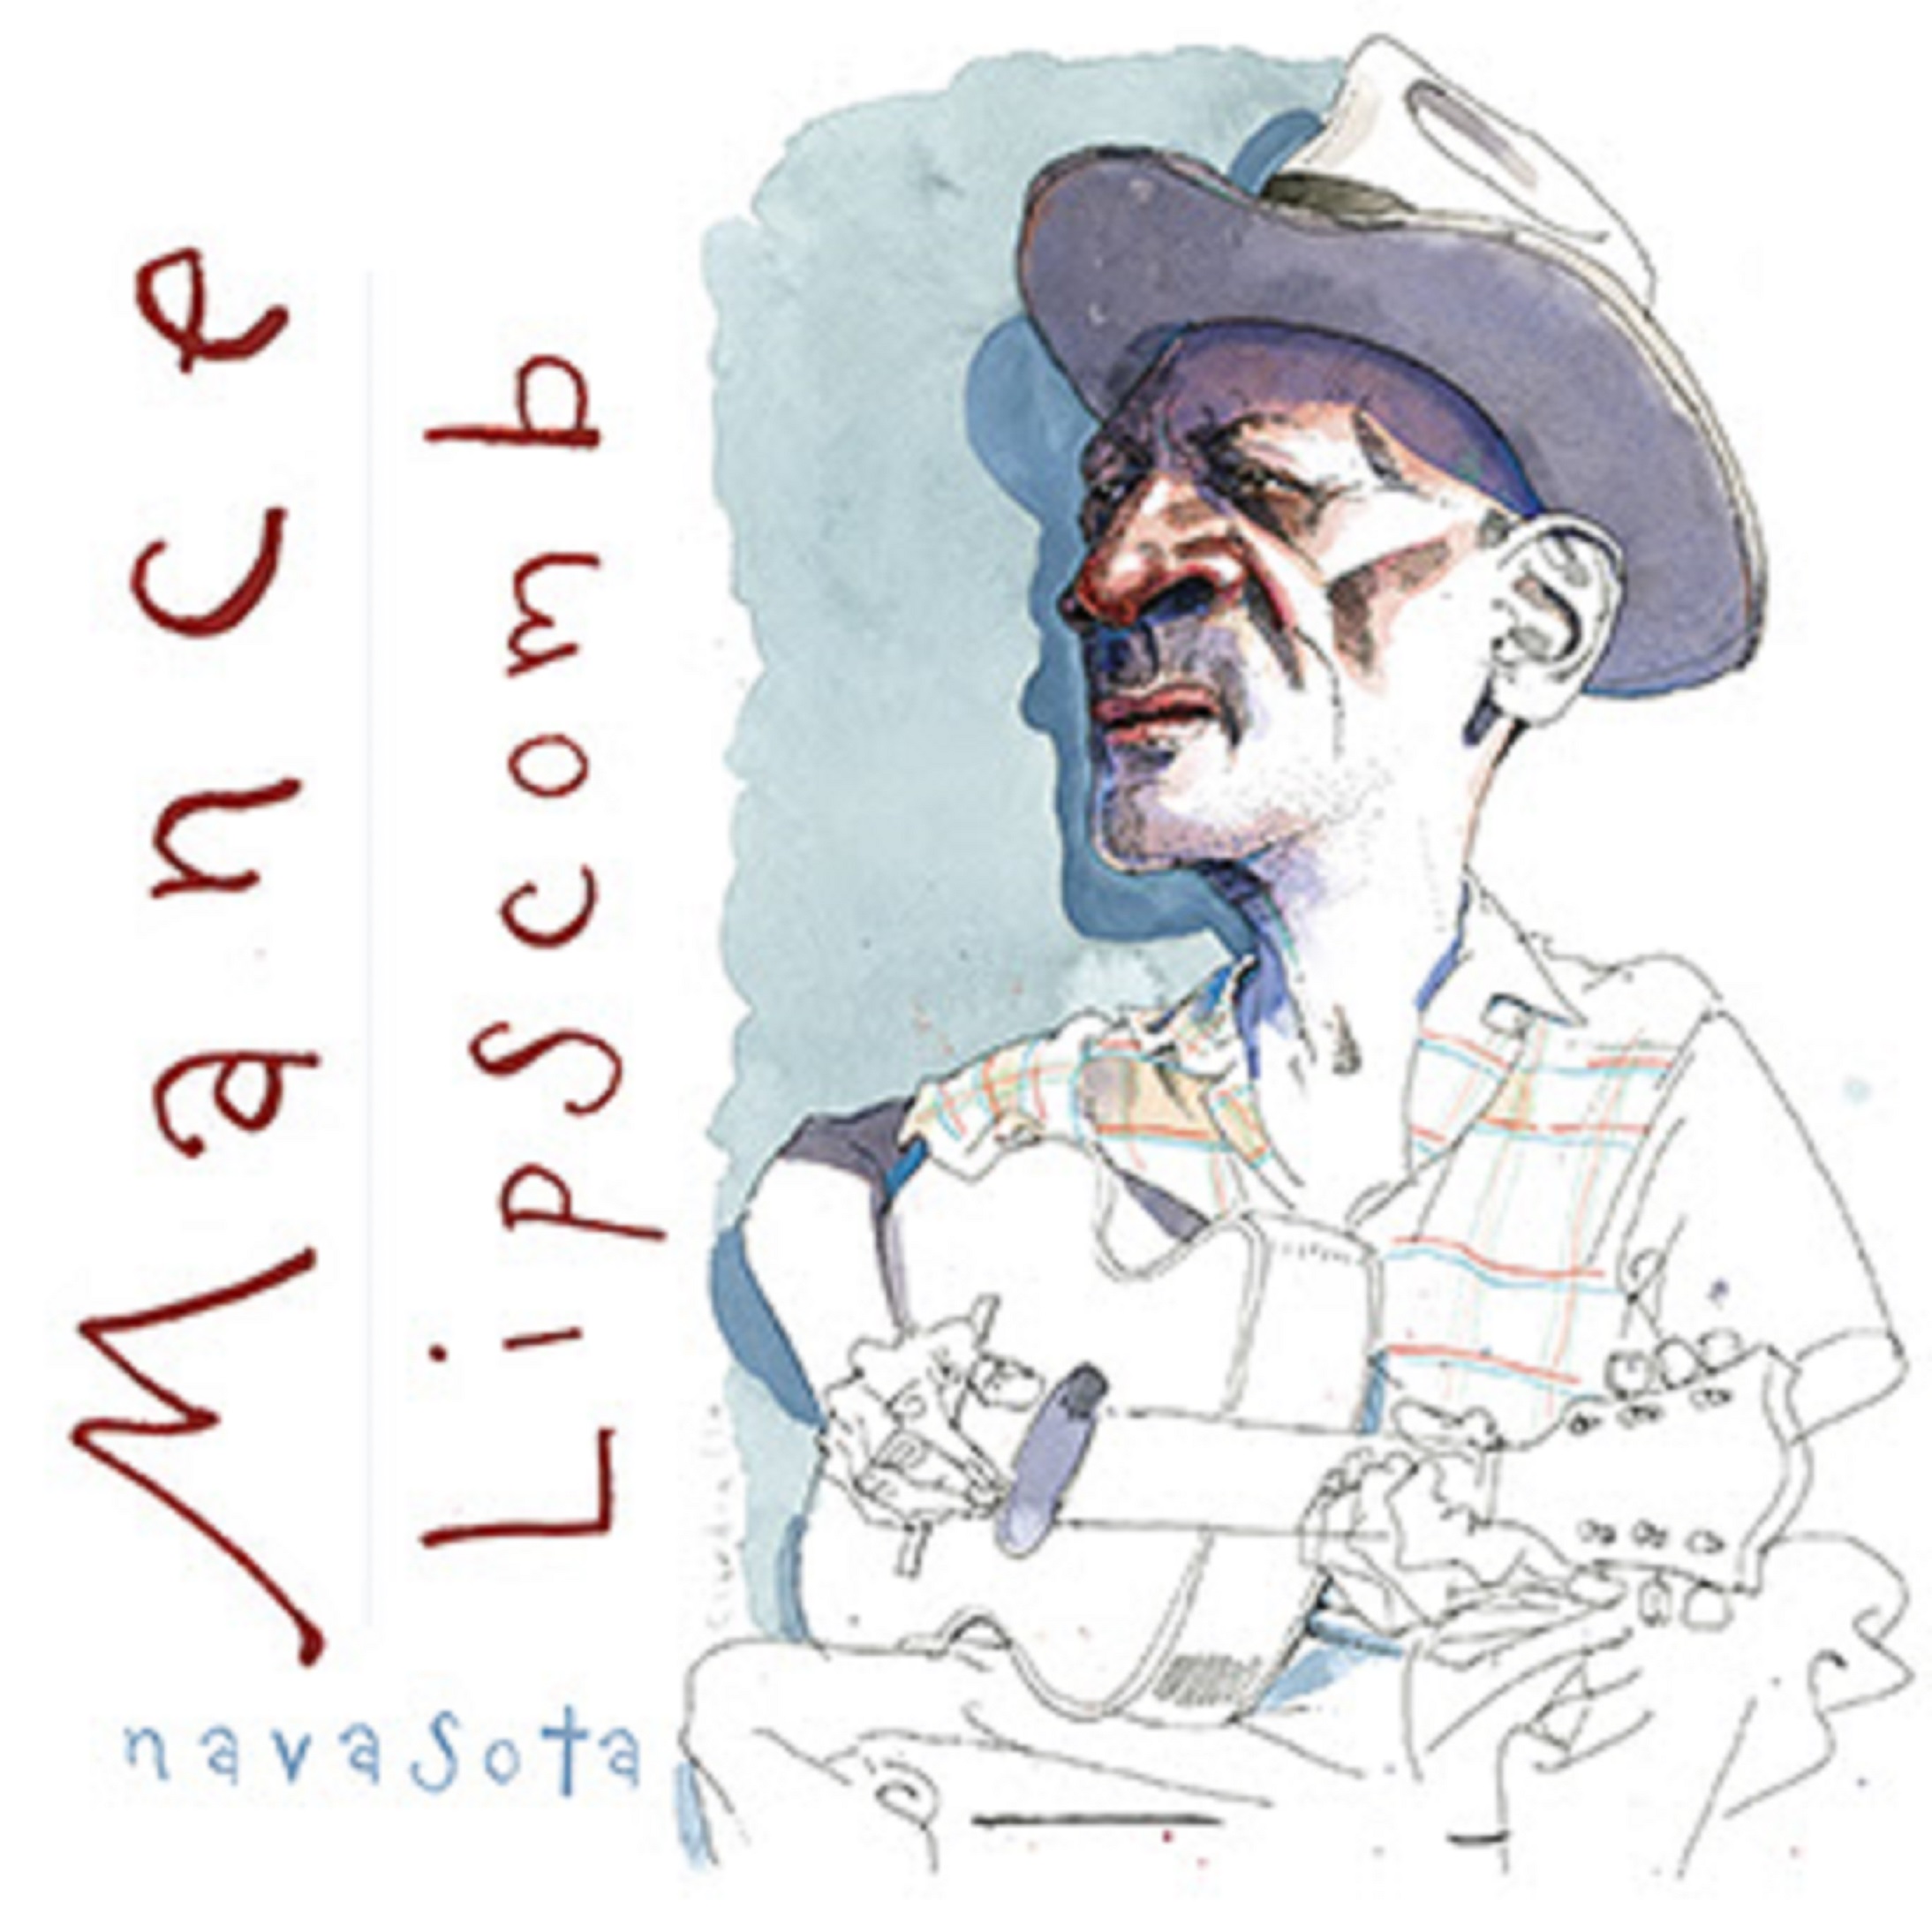 Historical Retrospective MANCE LIPSCOMB “NAVASOTA” on Sunset Blvd Records